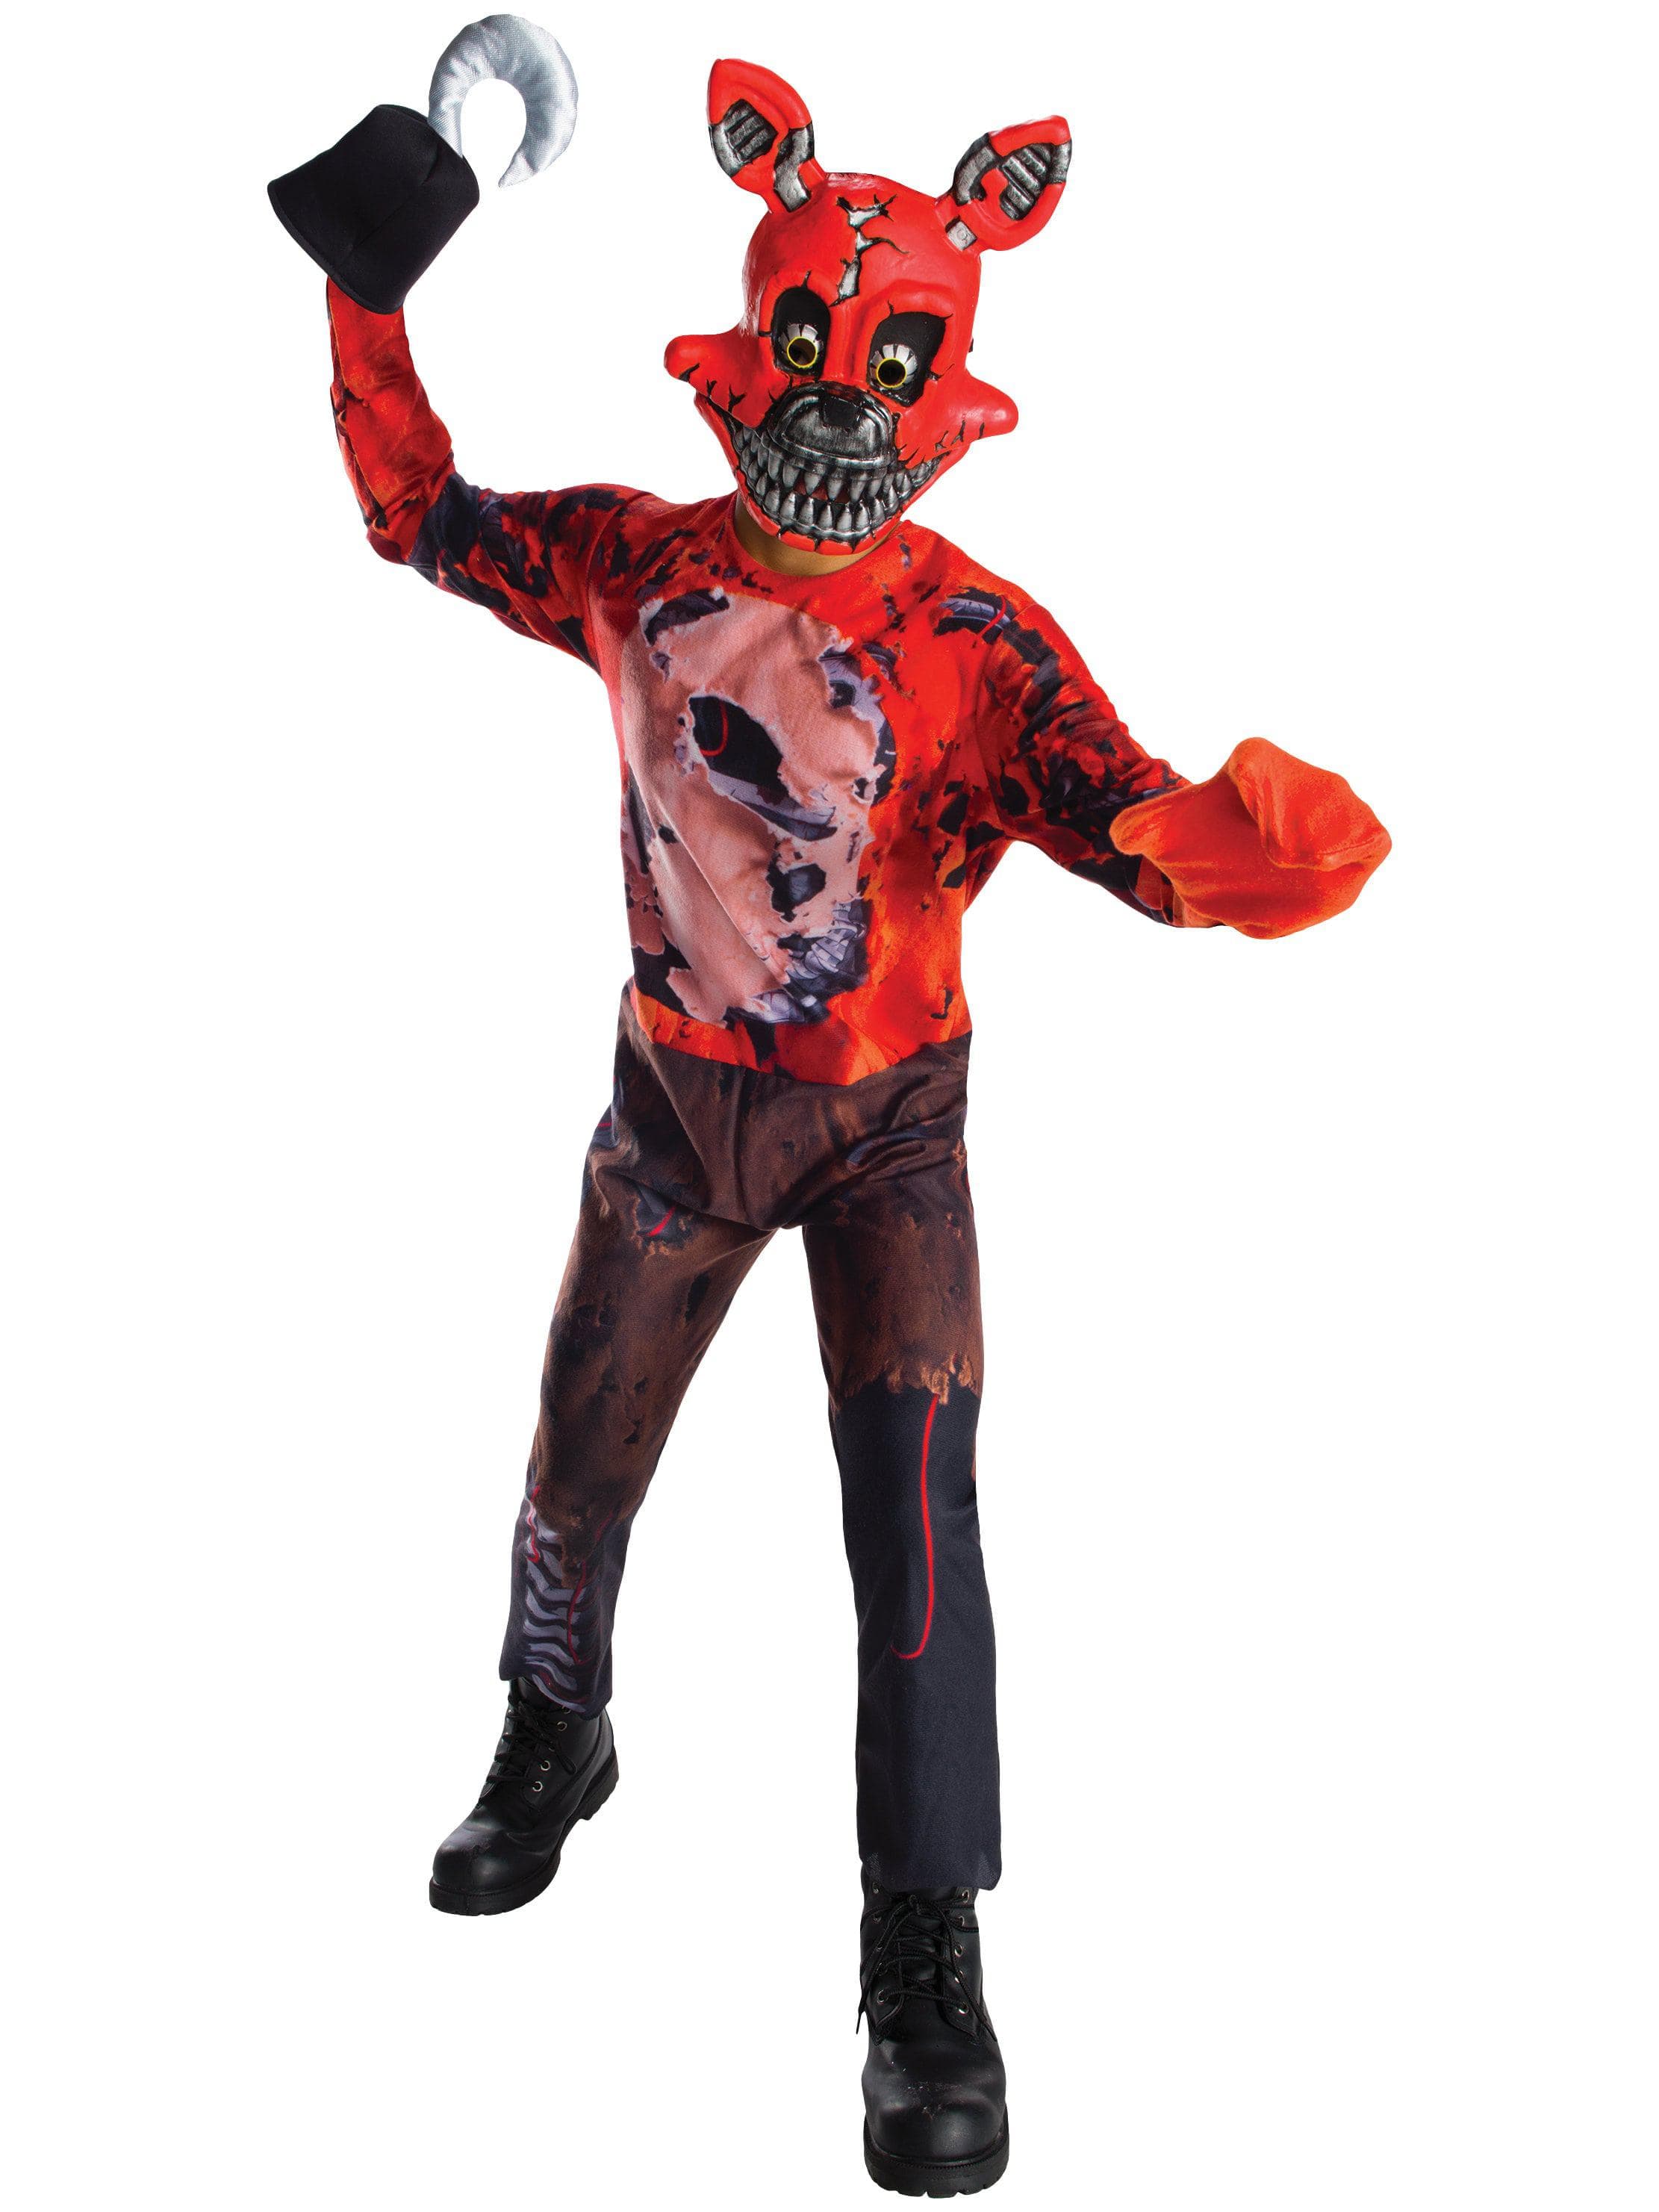 Long Ears Kitsune Fox Mask - The Third Eye in Red